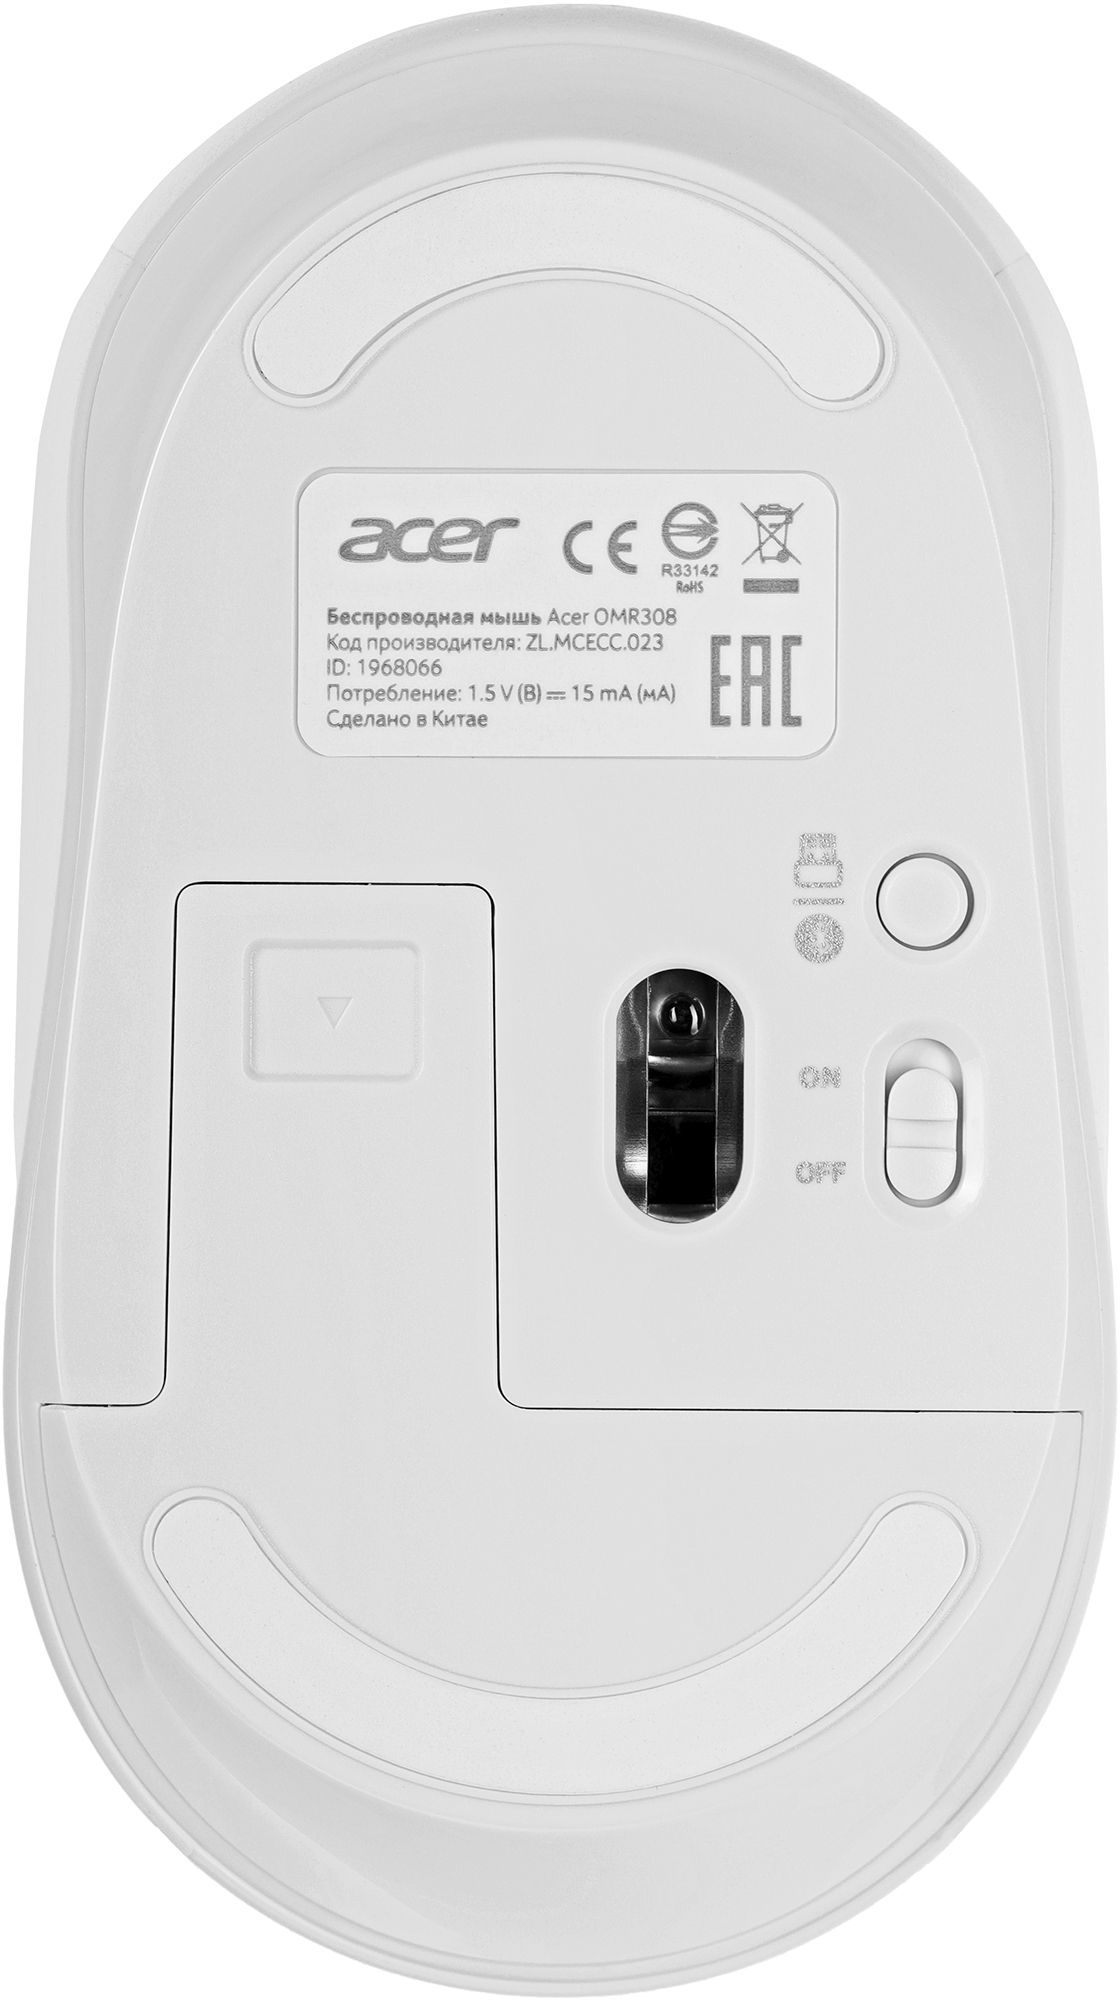 Мышь Acer OMR308, белый (zl. mcecc.023)